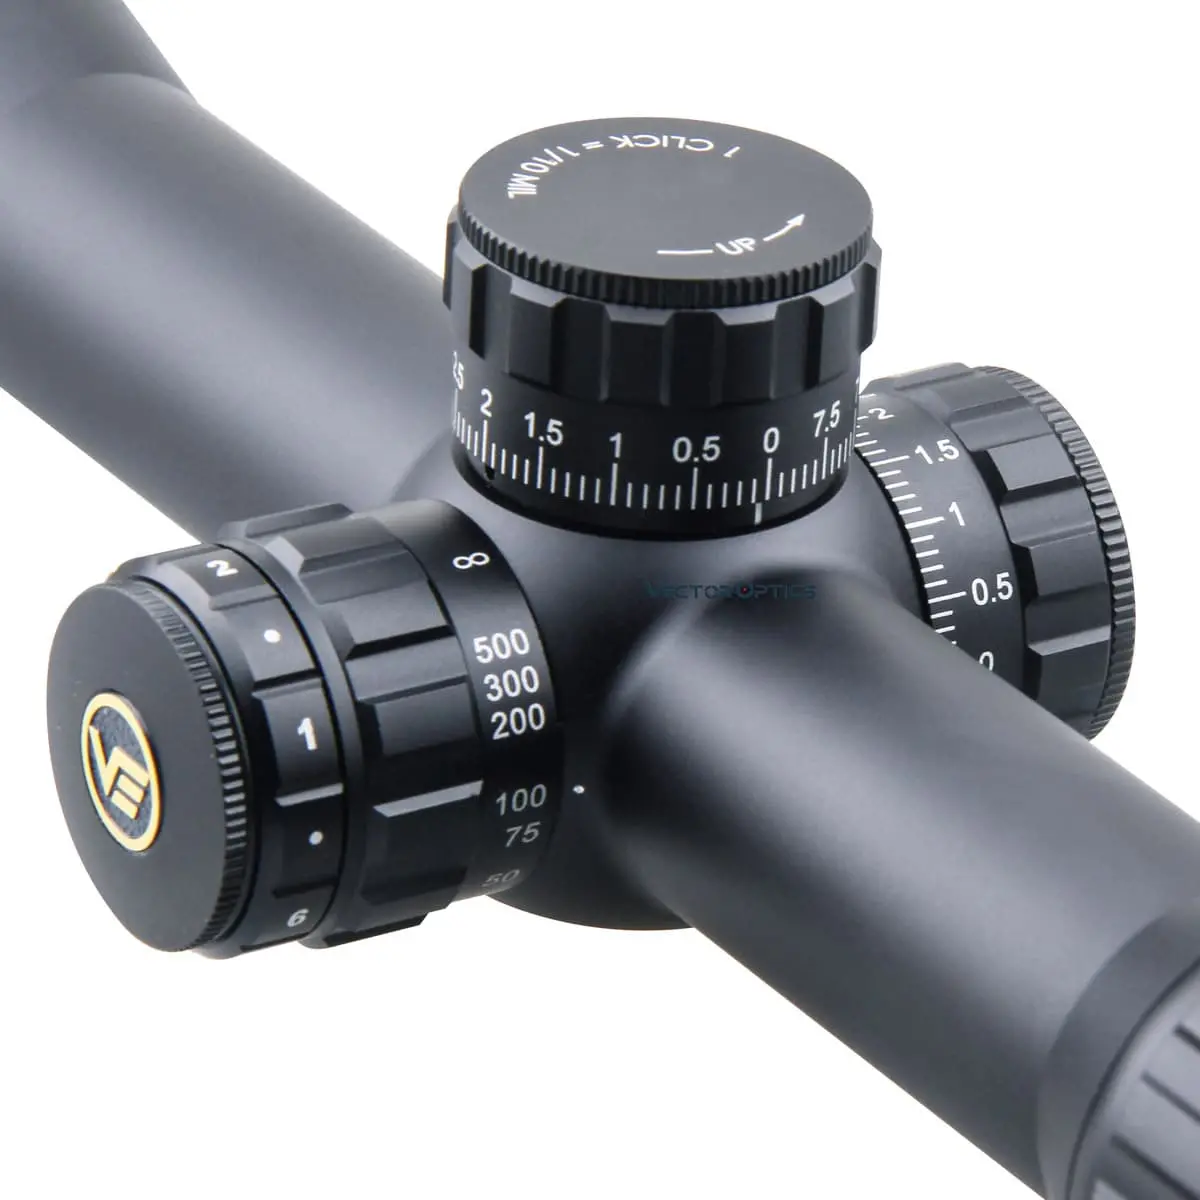 Paragon 6-30x56SFP GenII Riflescope